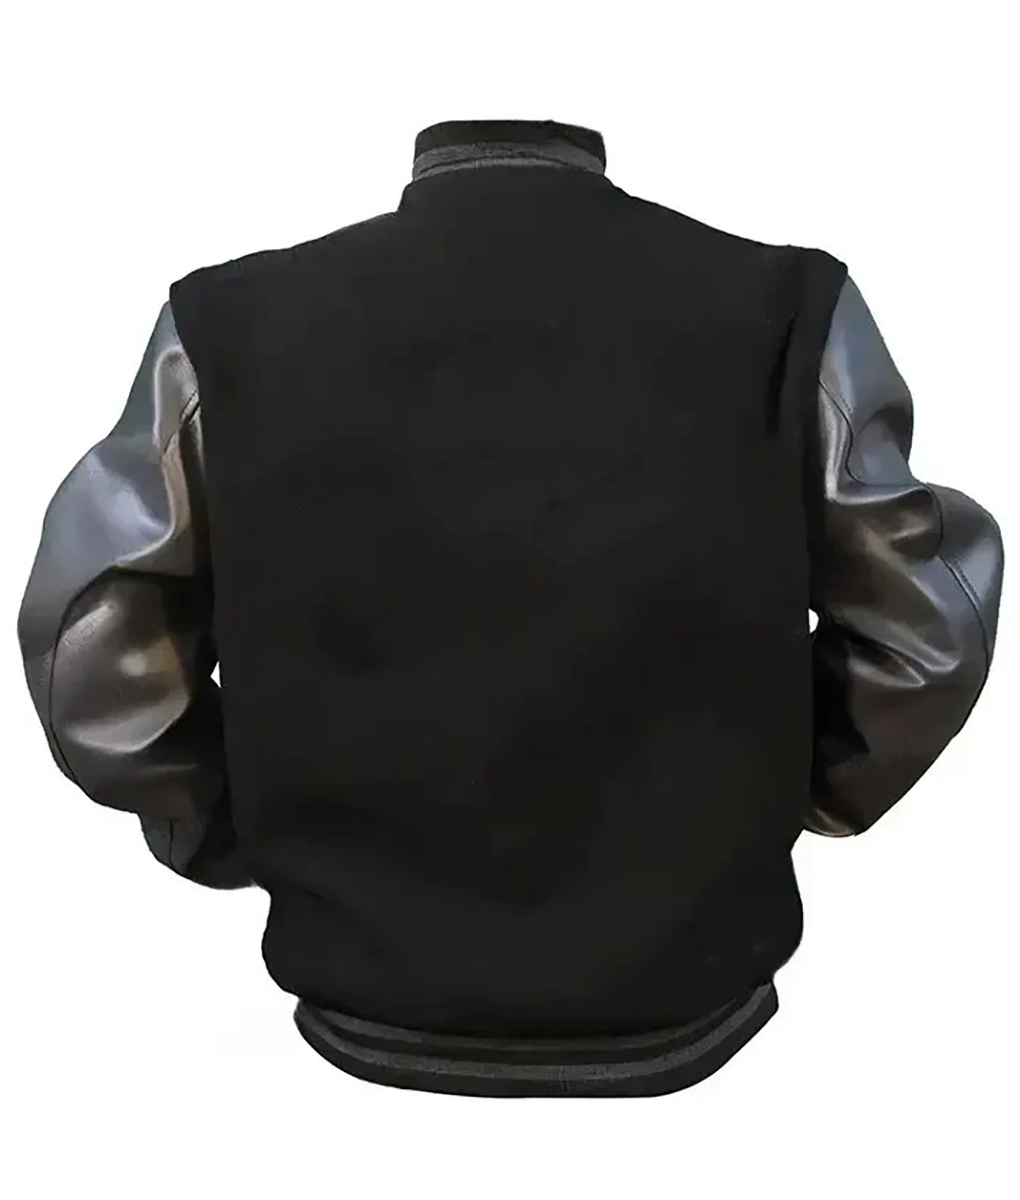 Lebron James Black Varsity Jacket (1)